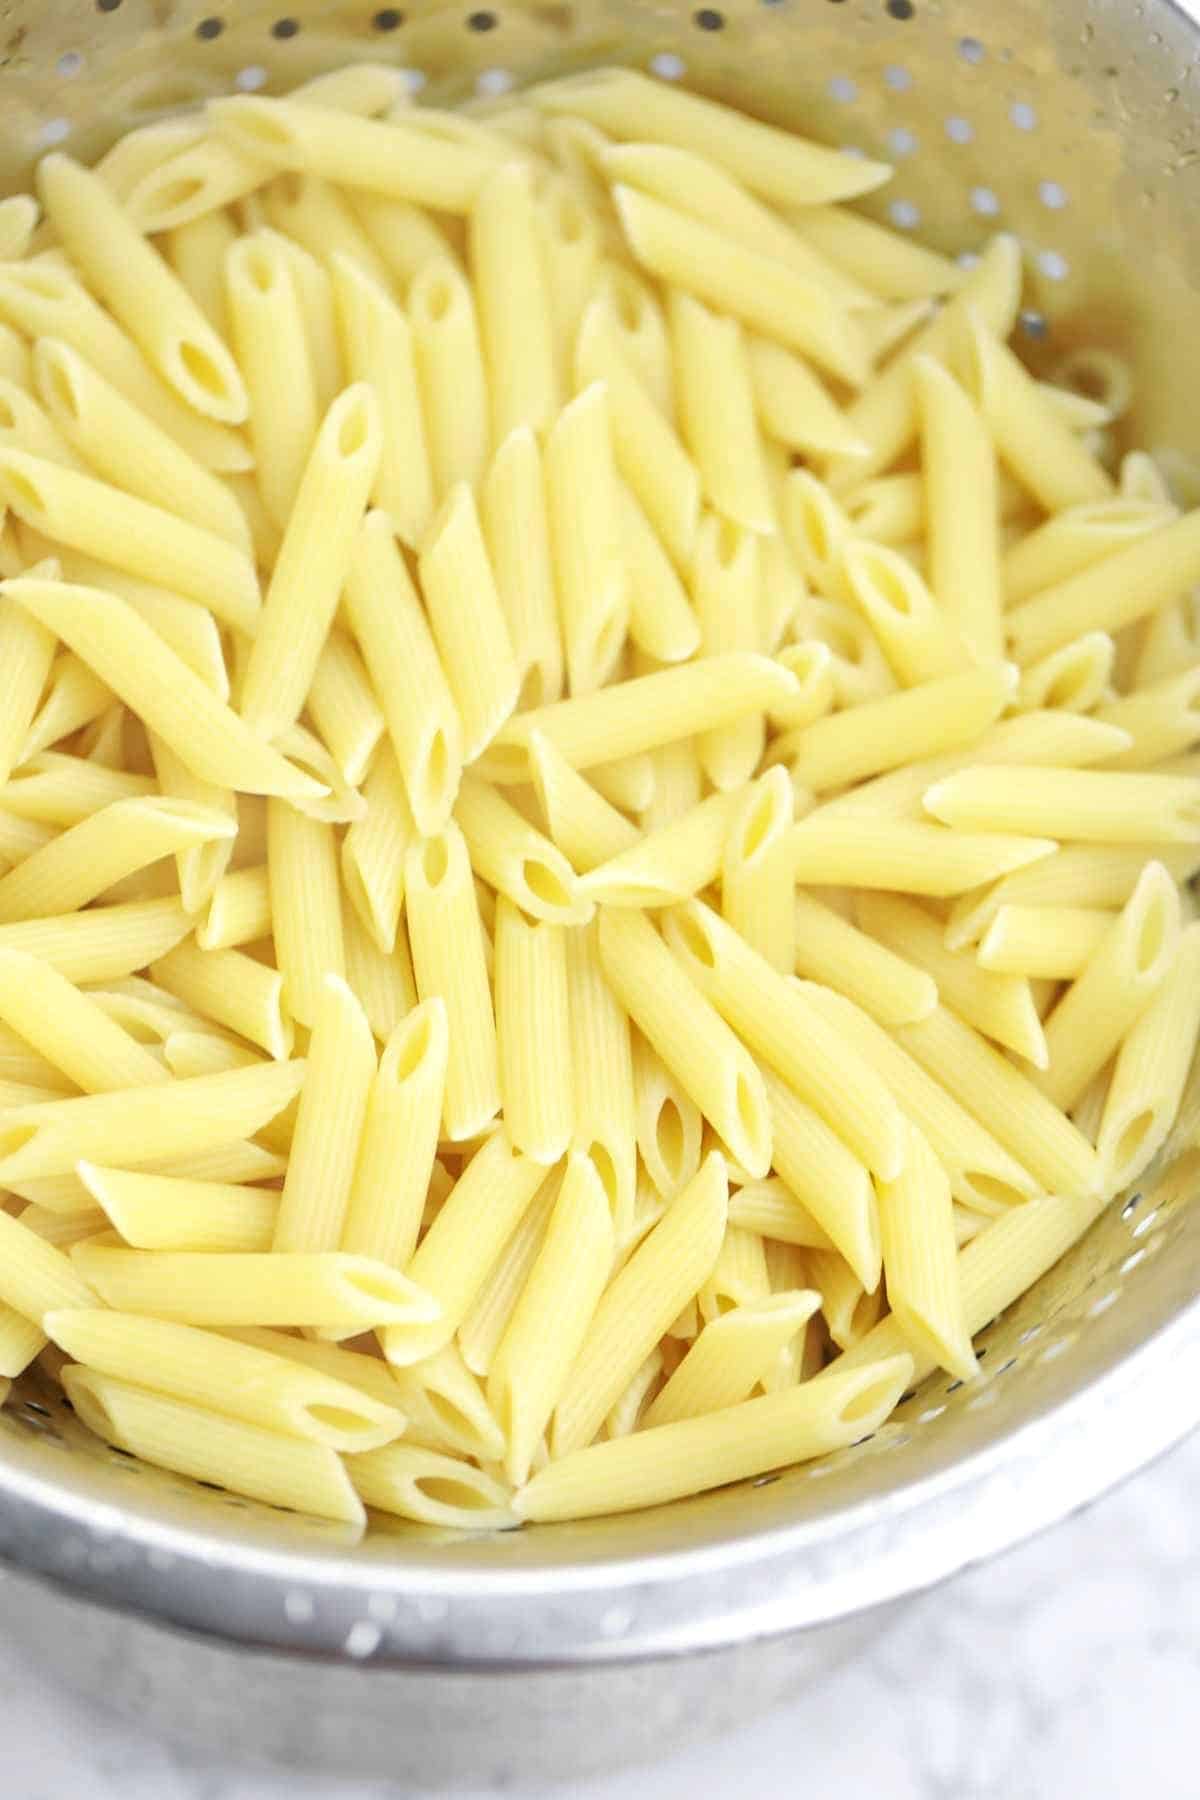 Boiled pasta in a colander.